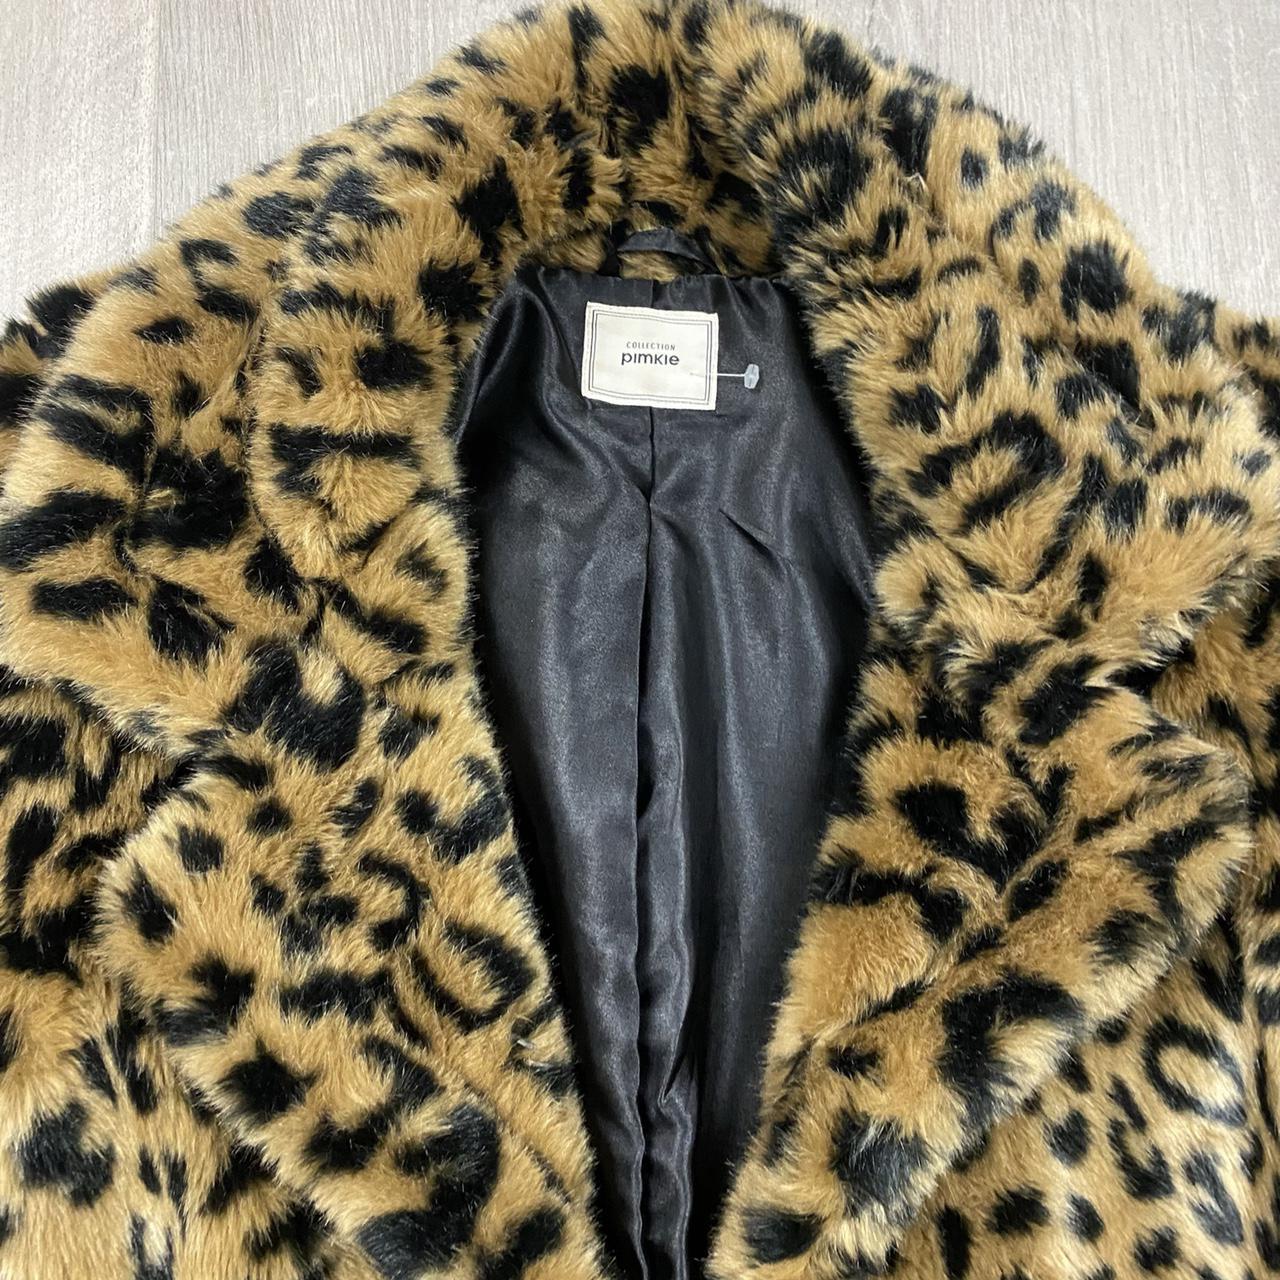 Vintage 2000s Pimkie leopard print fuzzy fur... - Depop